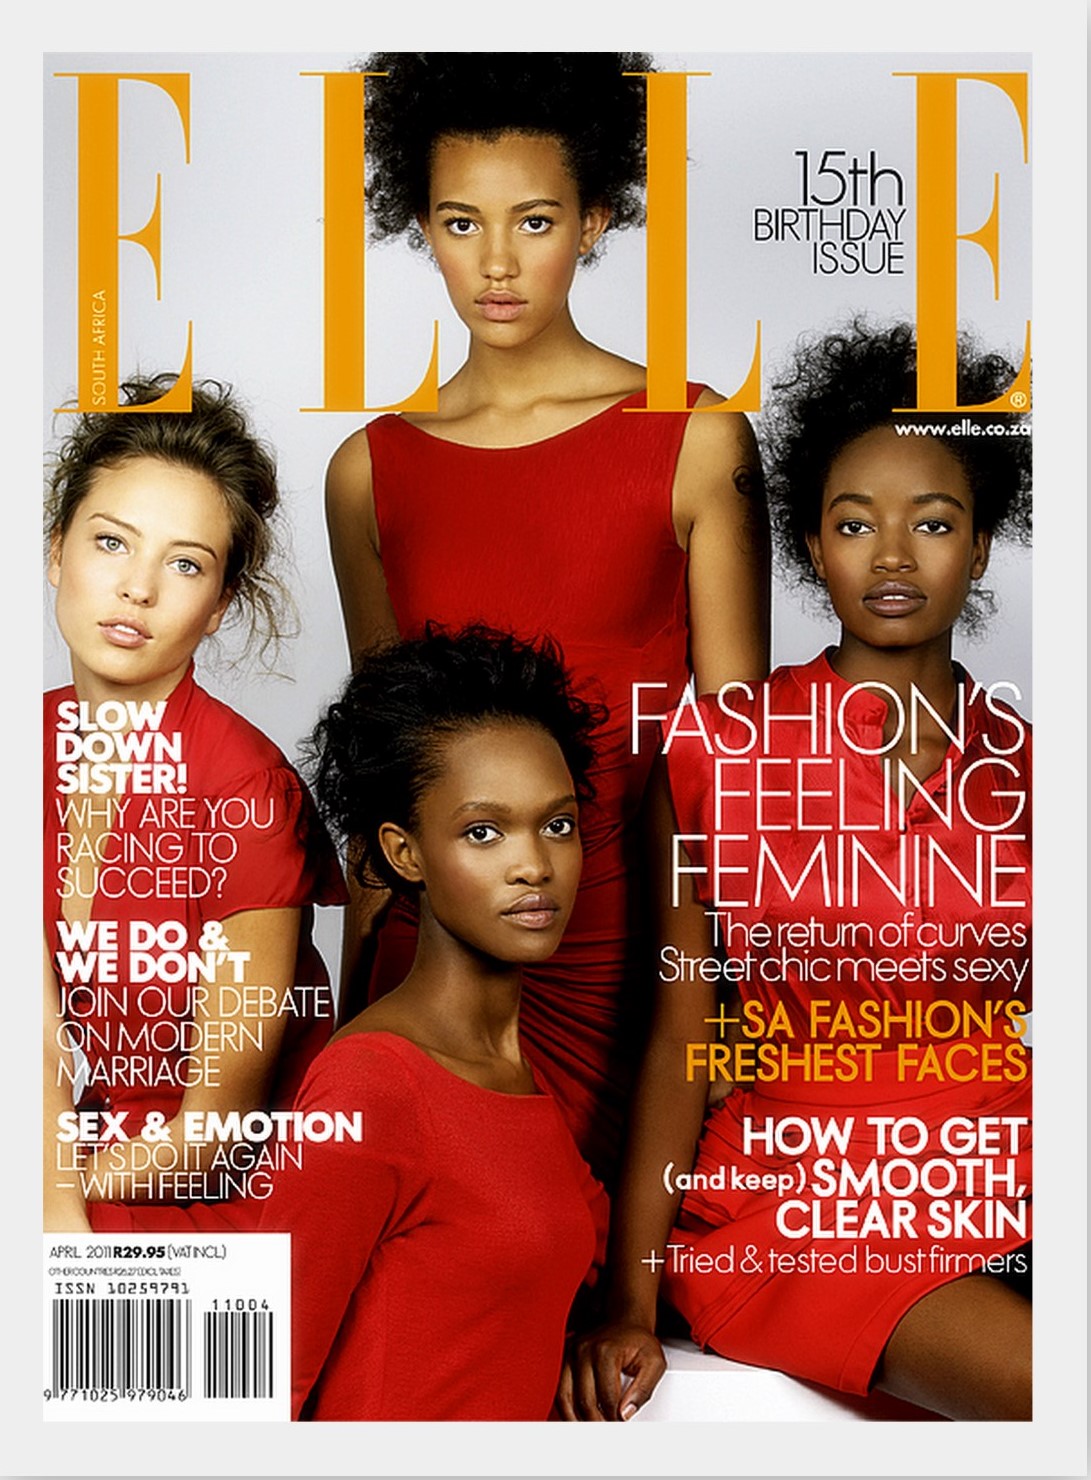 The Kokonut Stylist: Happy Birthday To ELLE Magazine South Africa